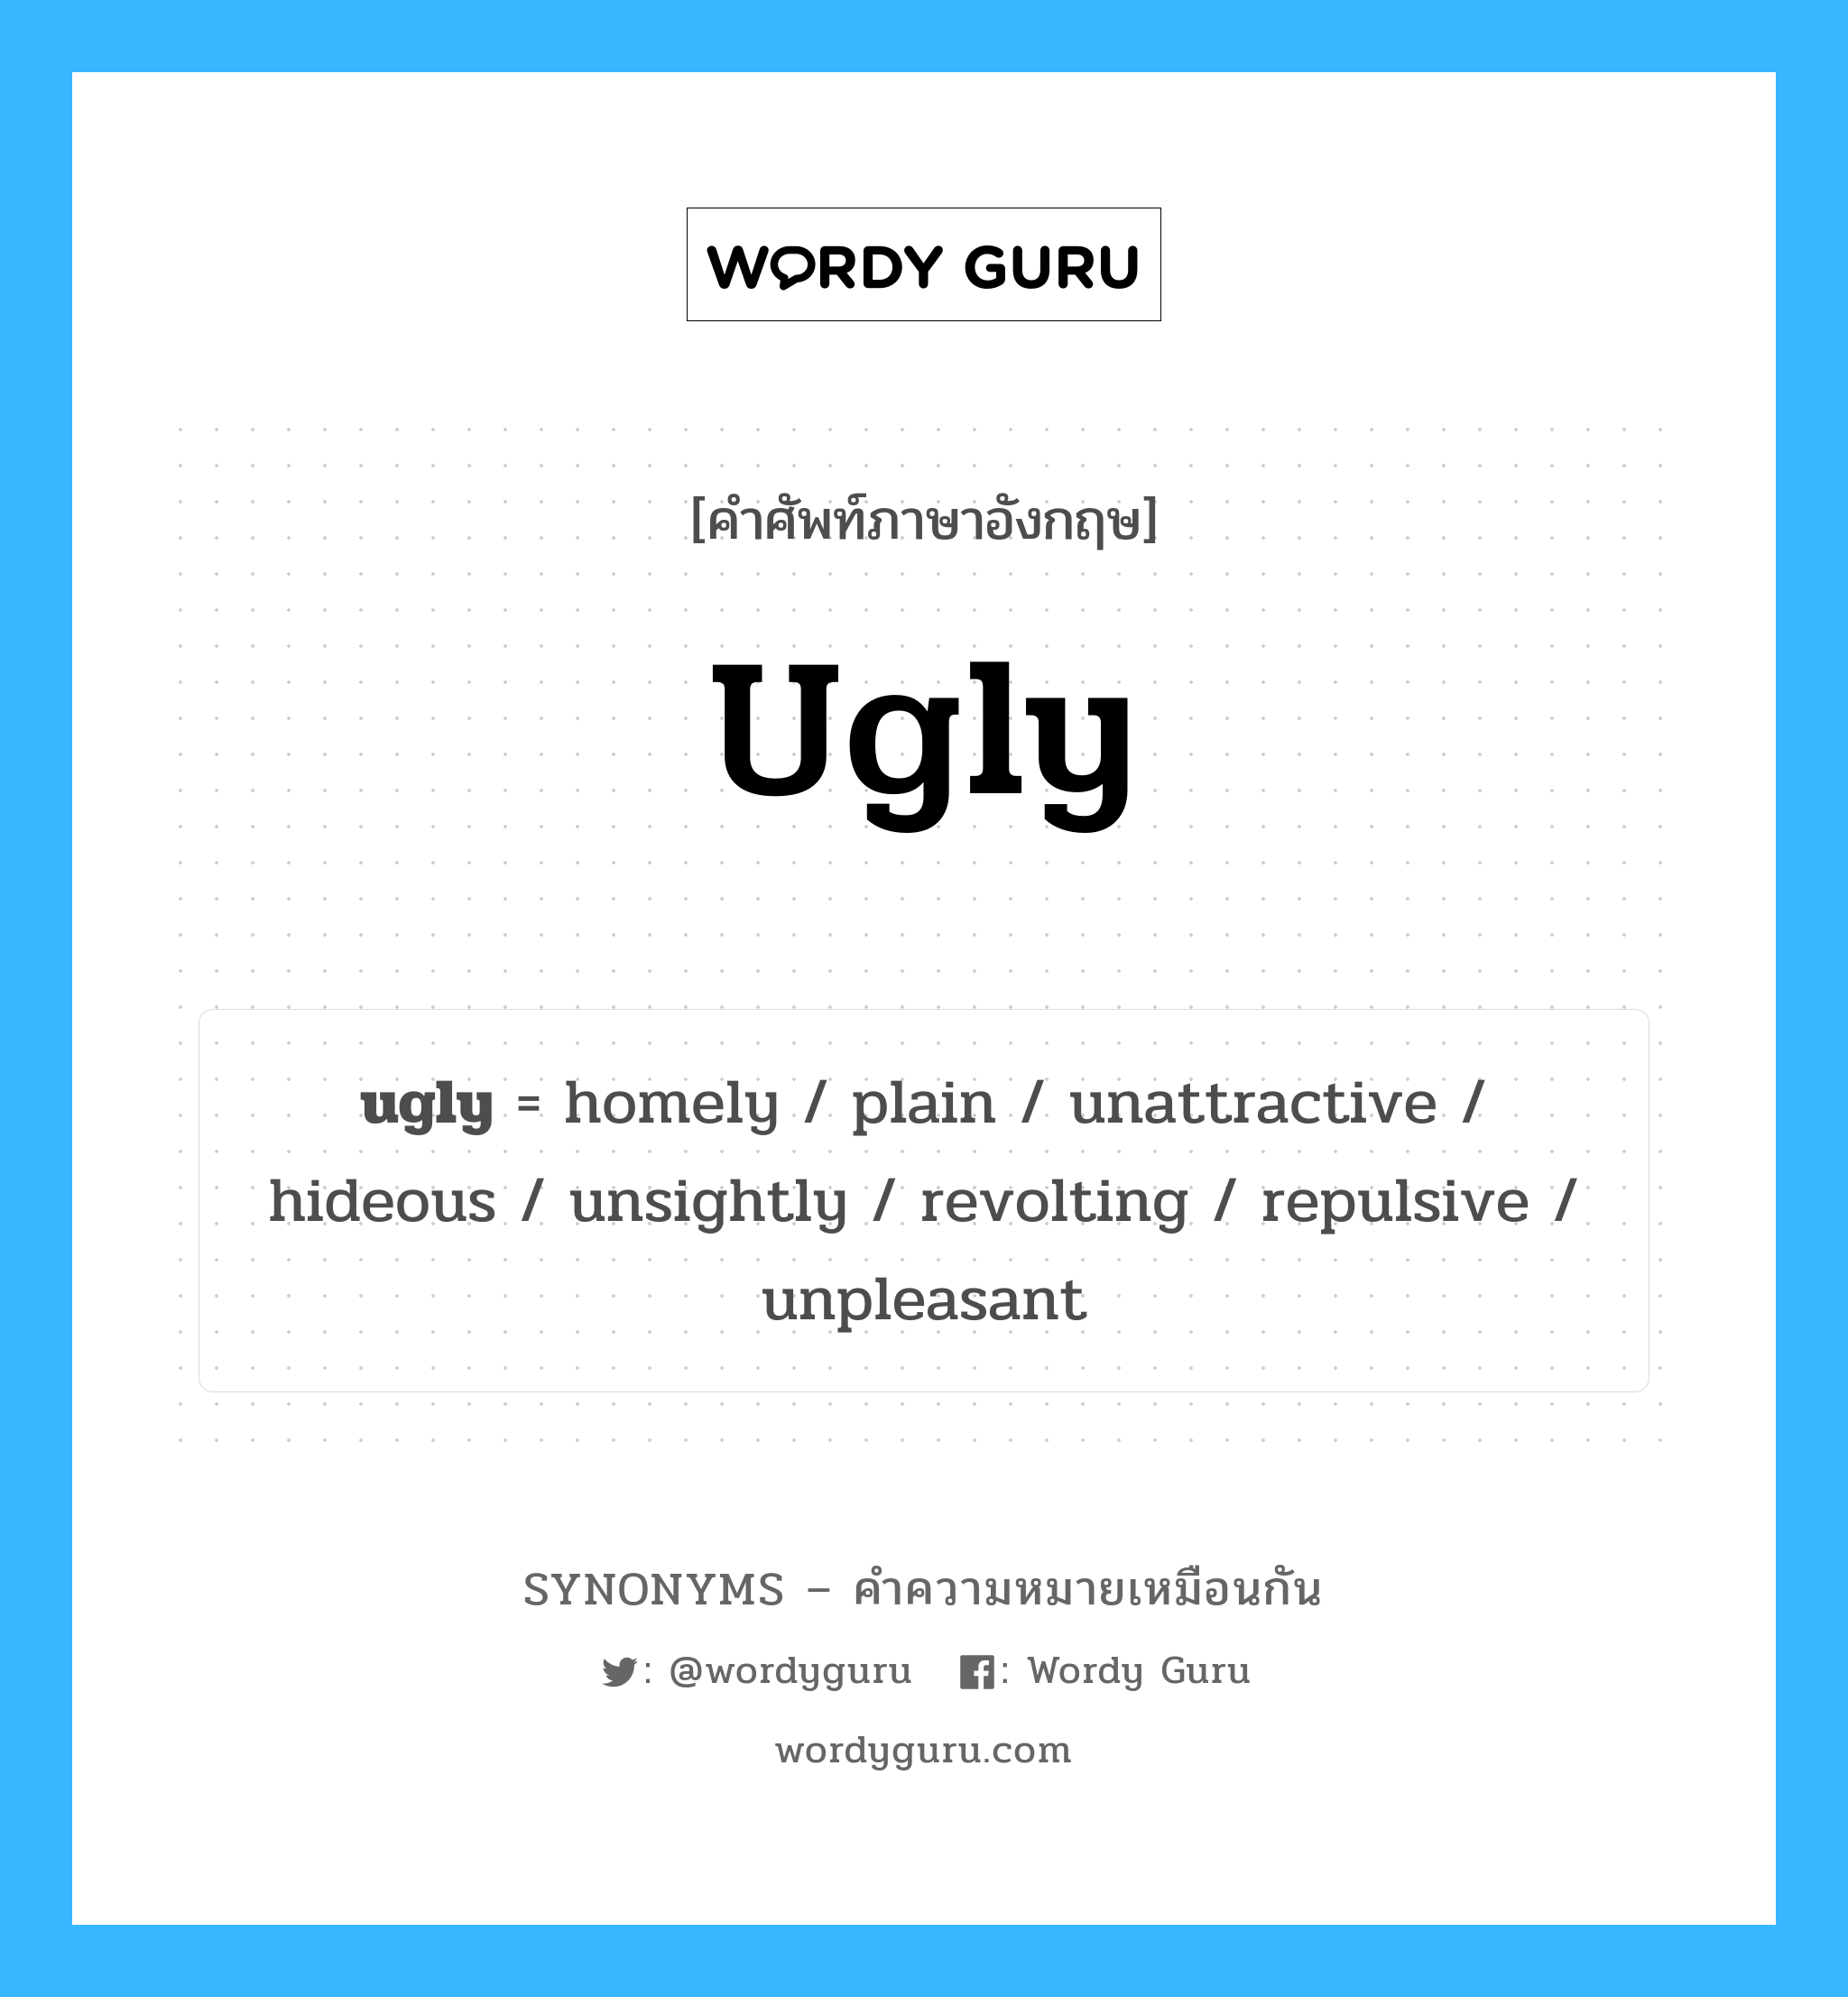 hideous เป็นหนึ่งใน ugly และมีคำอื่น ๆ อีกดังนี้, คำศัพท์ภาษาอังกฤษ hideous ความหมายคล้ายกันกับ ugly แปลว่า ไม่เป็นใจ หมวด ugly